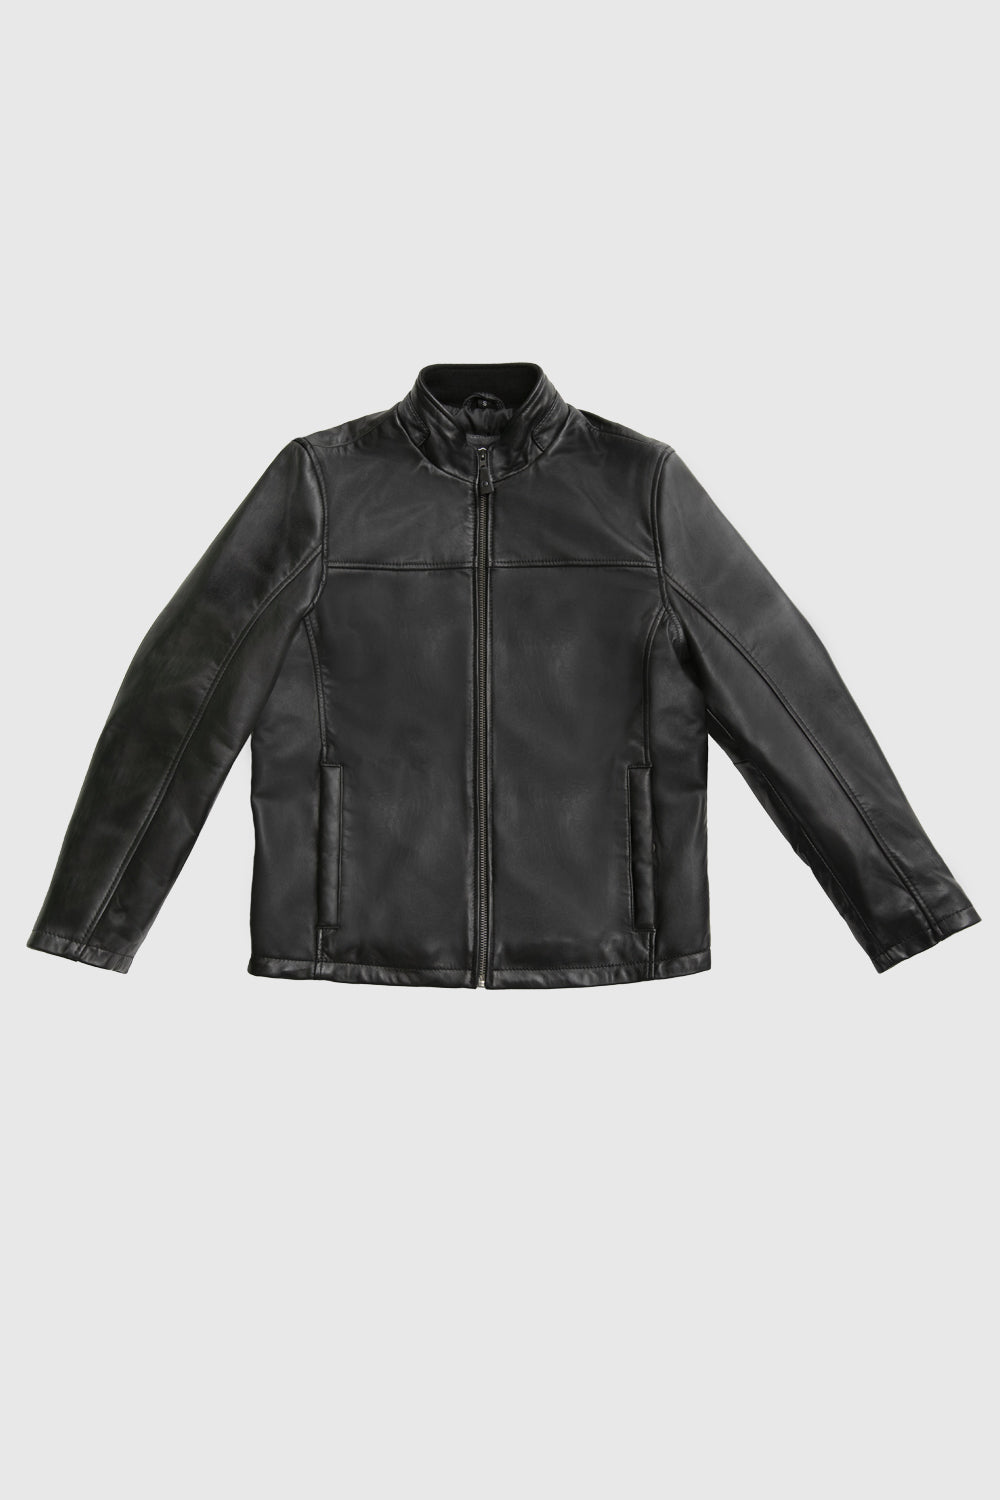 Zain Mens Fashion Leather Jacket